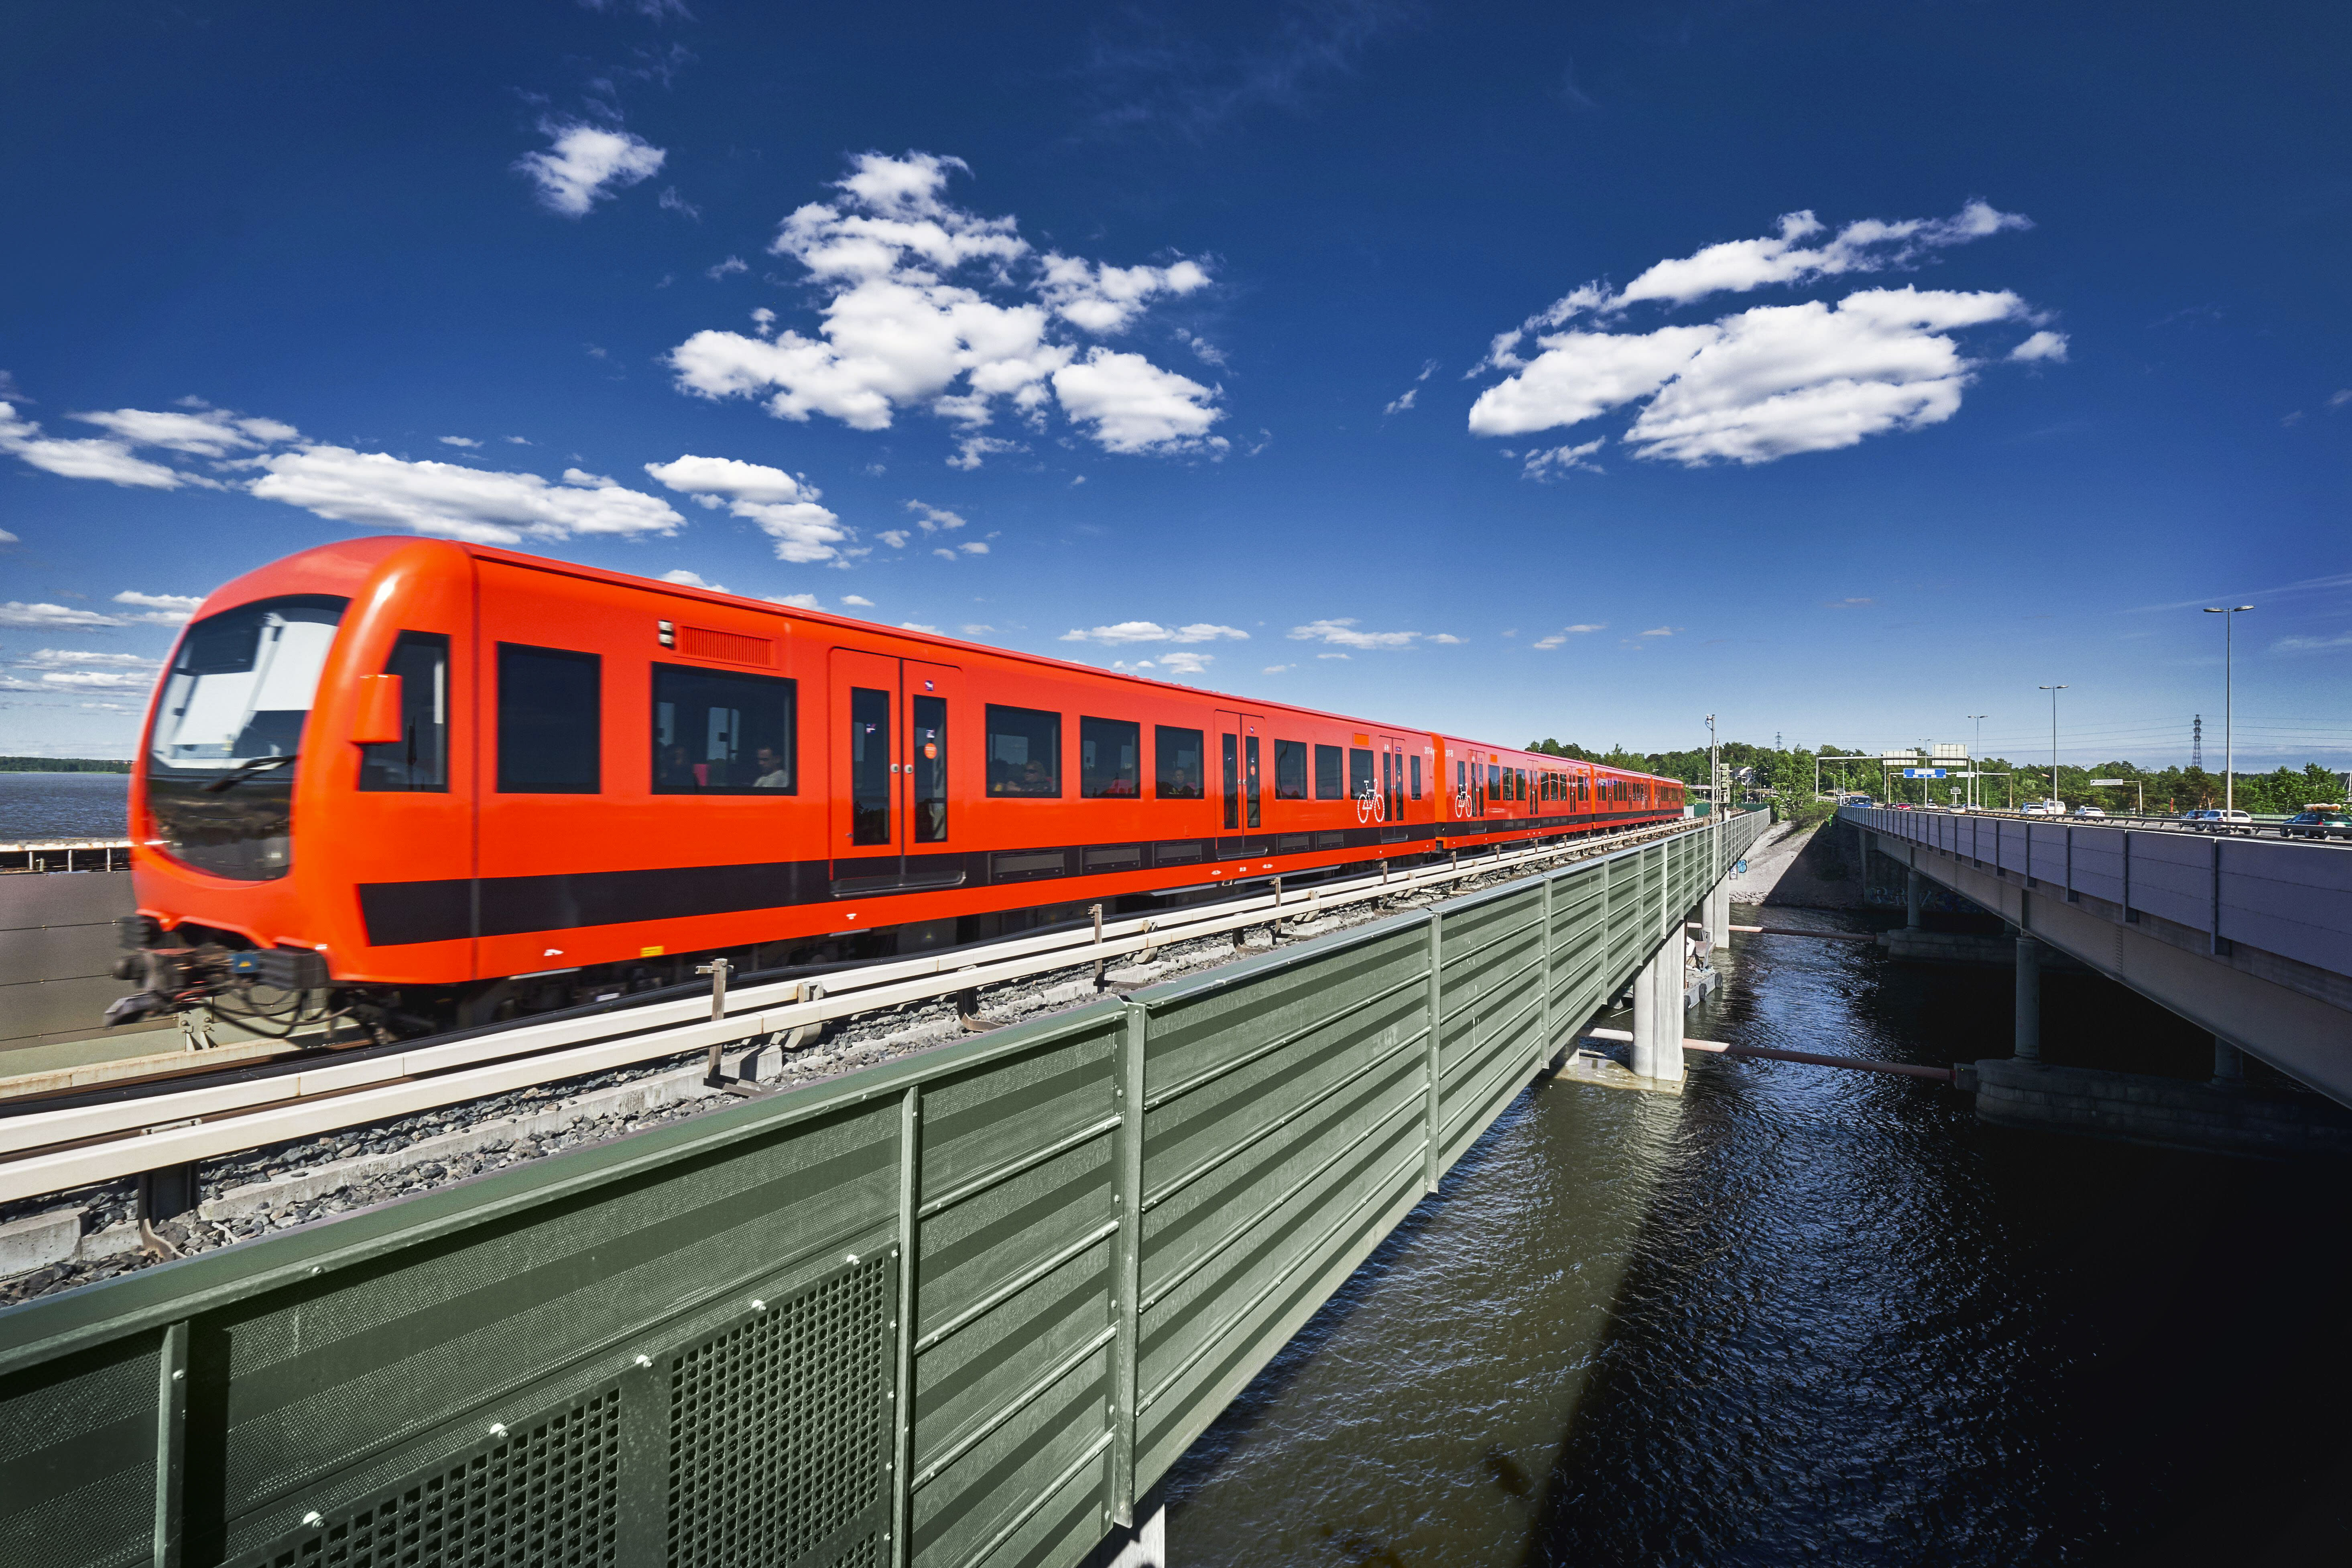 The Espoo metro extension will open in December